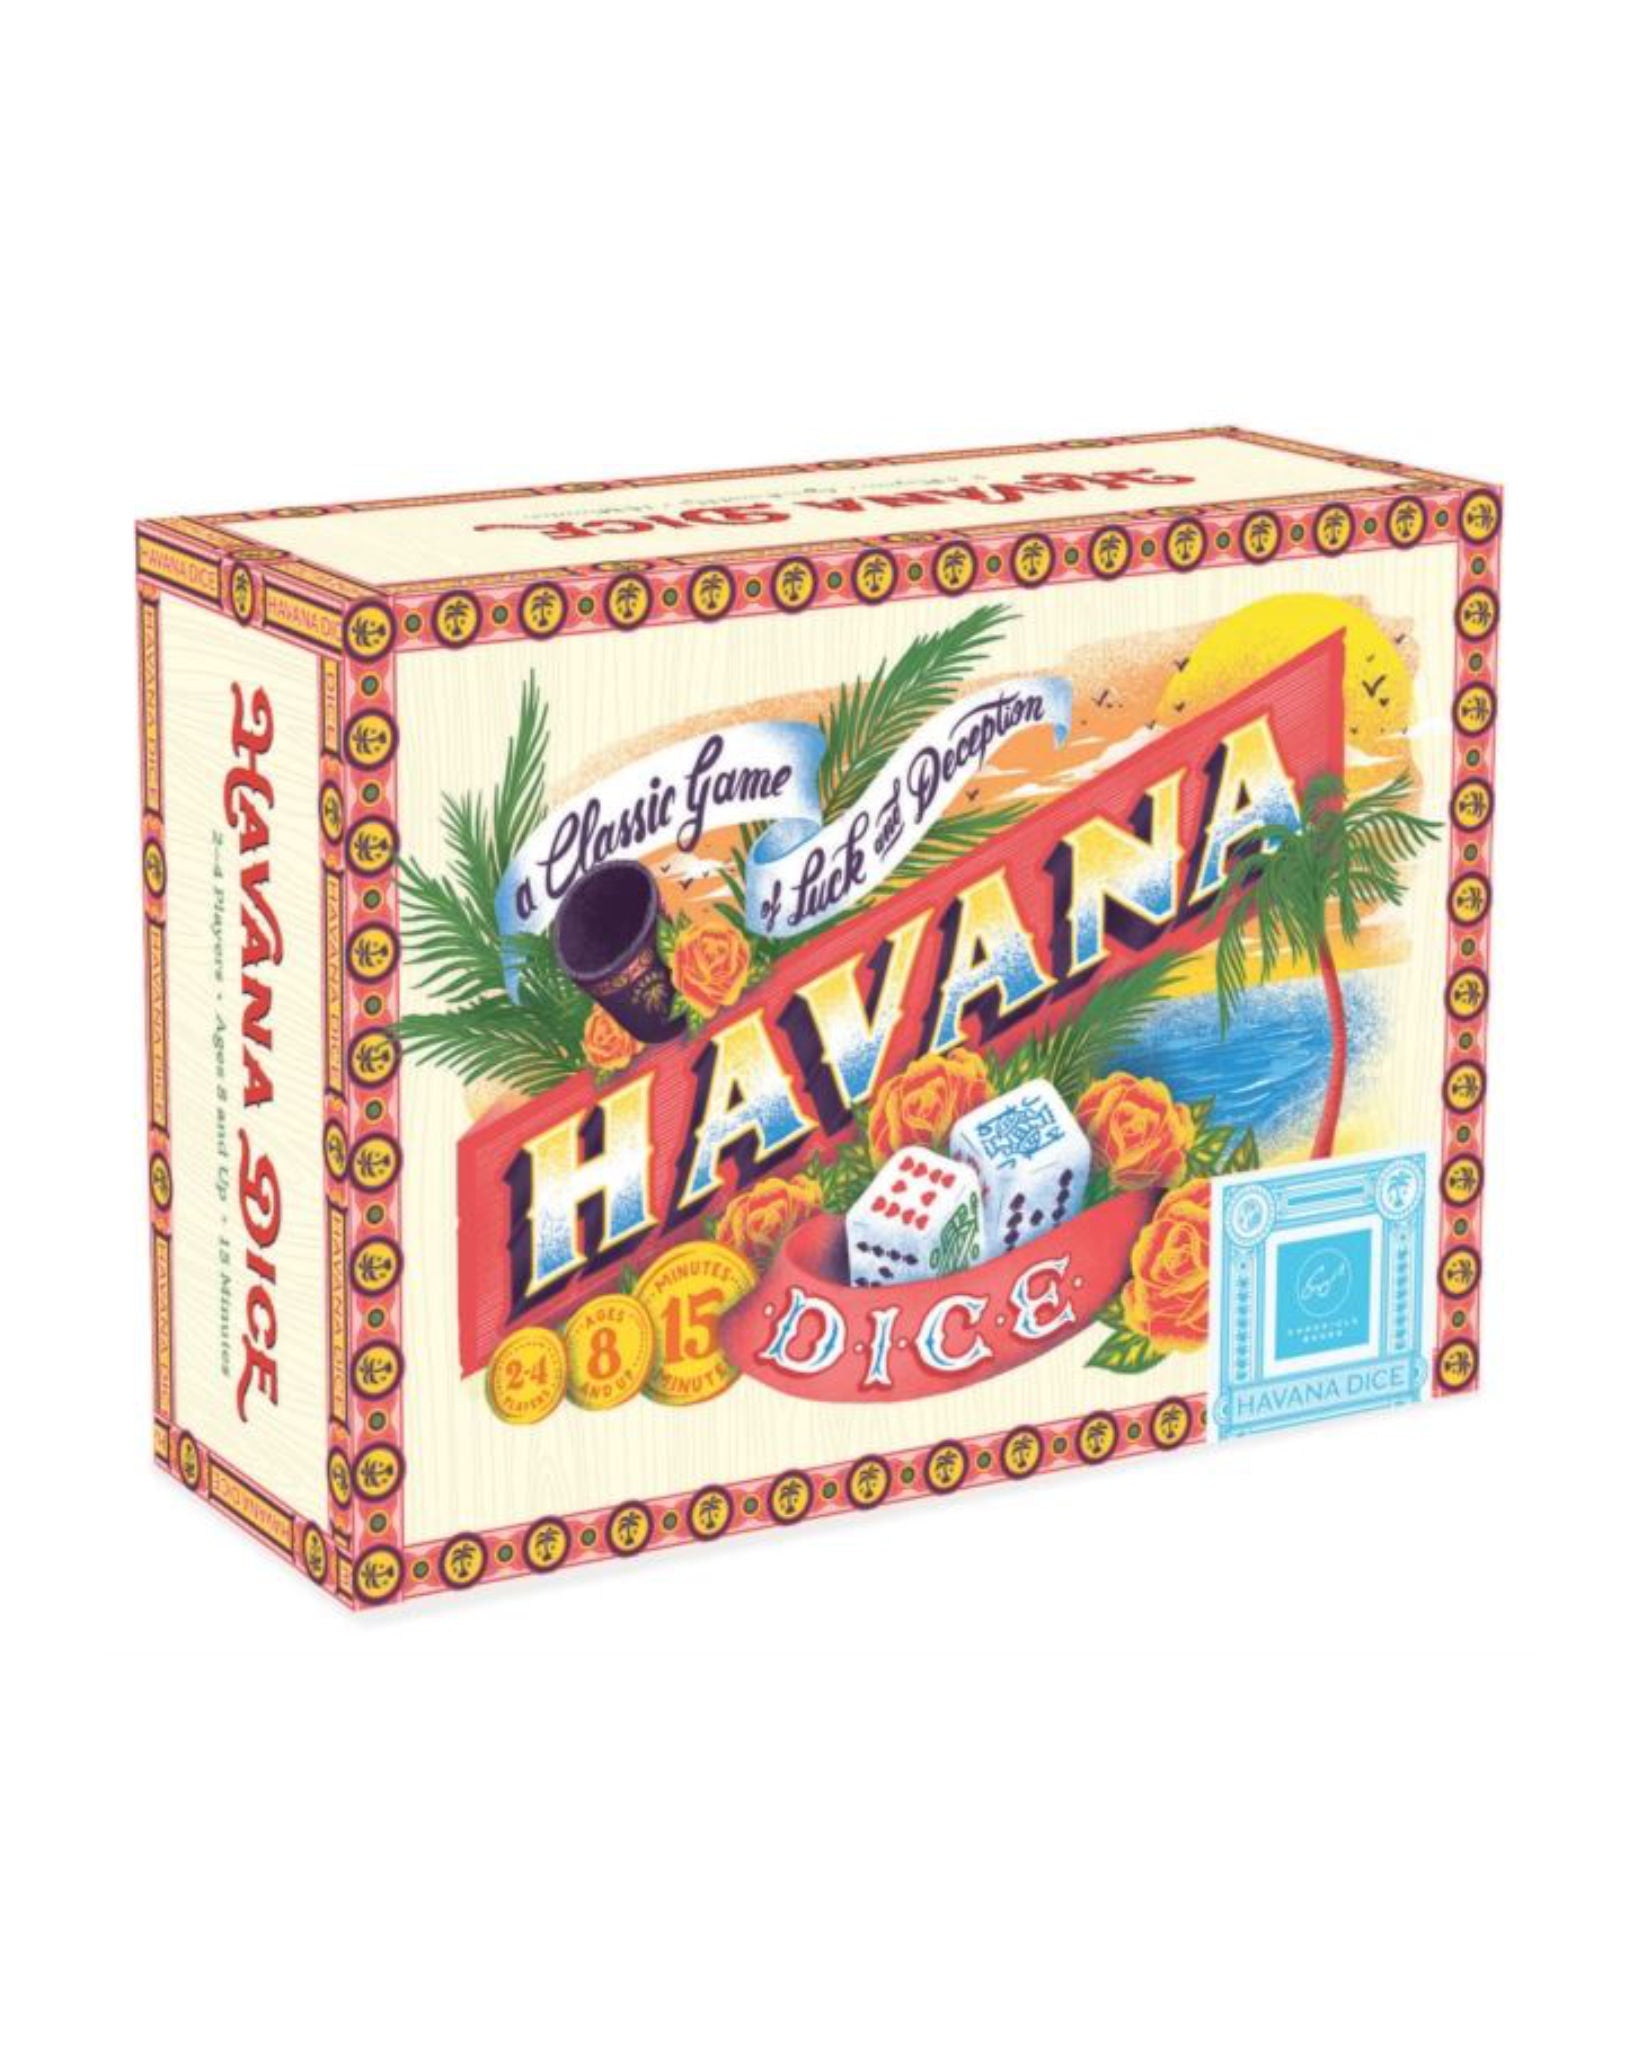 Havana Dice Game